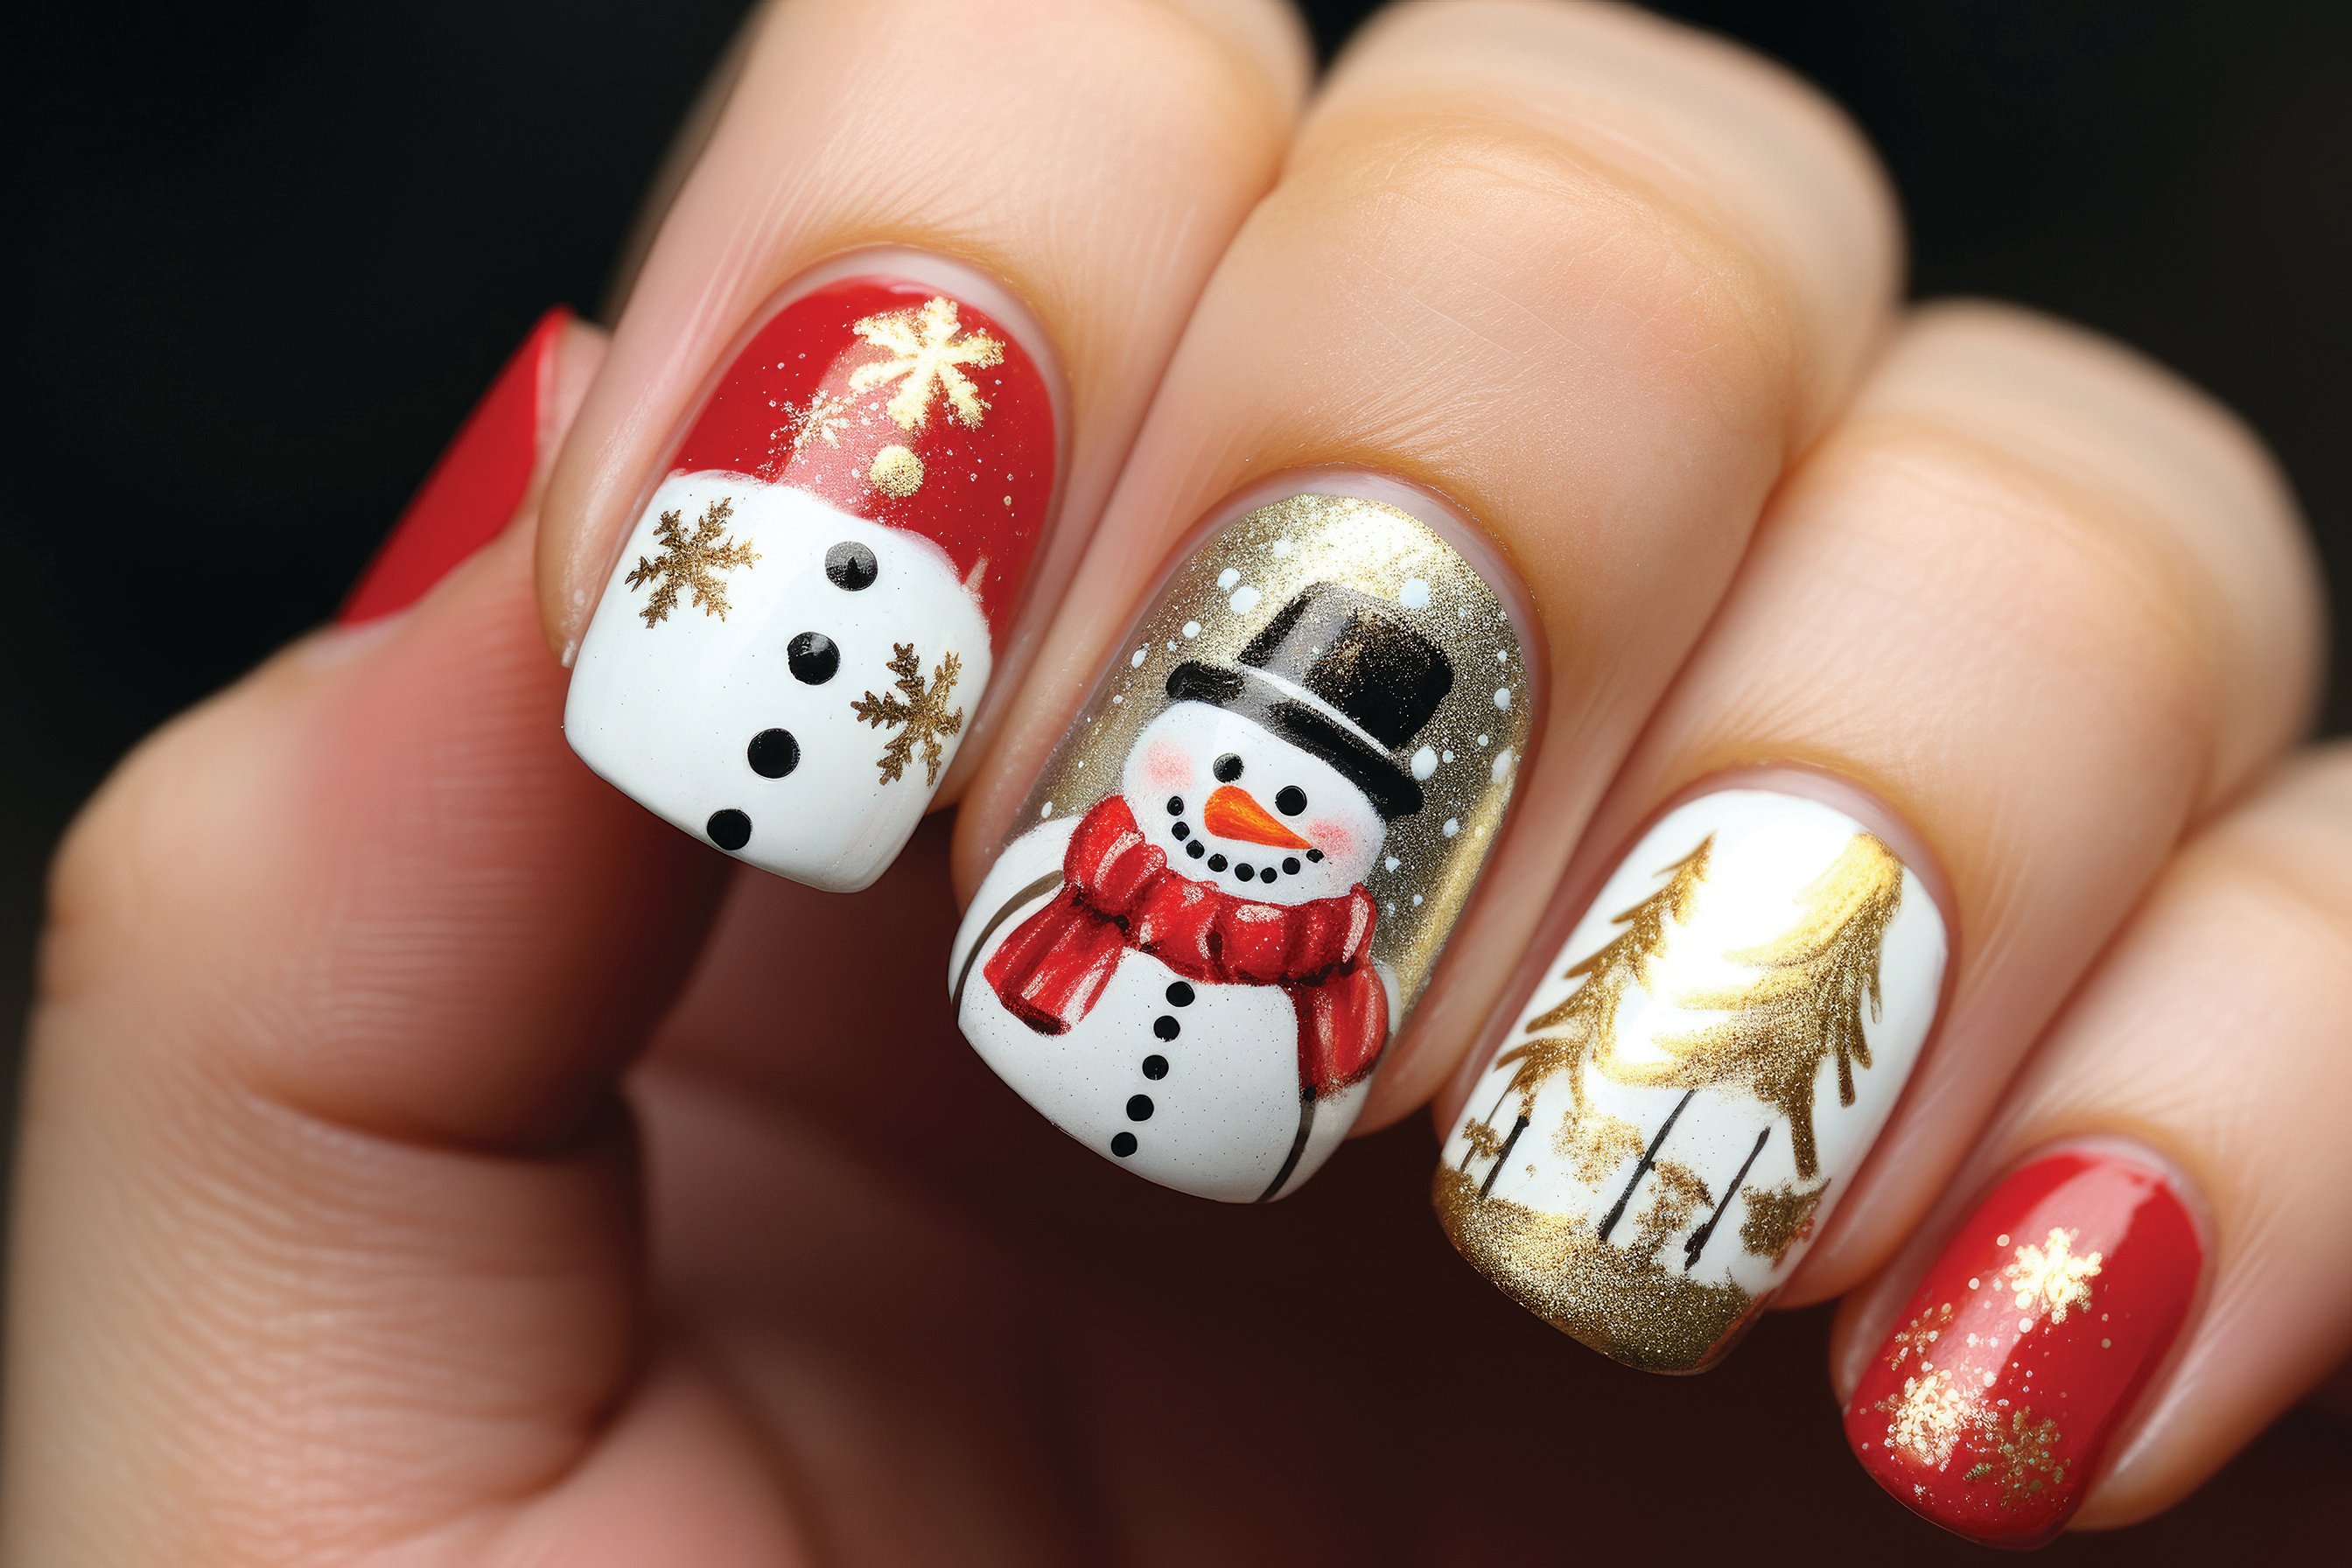 Winter nail designs: 19 ideas that'll get you feeling festive